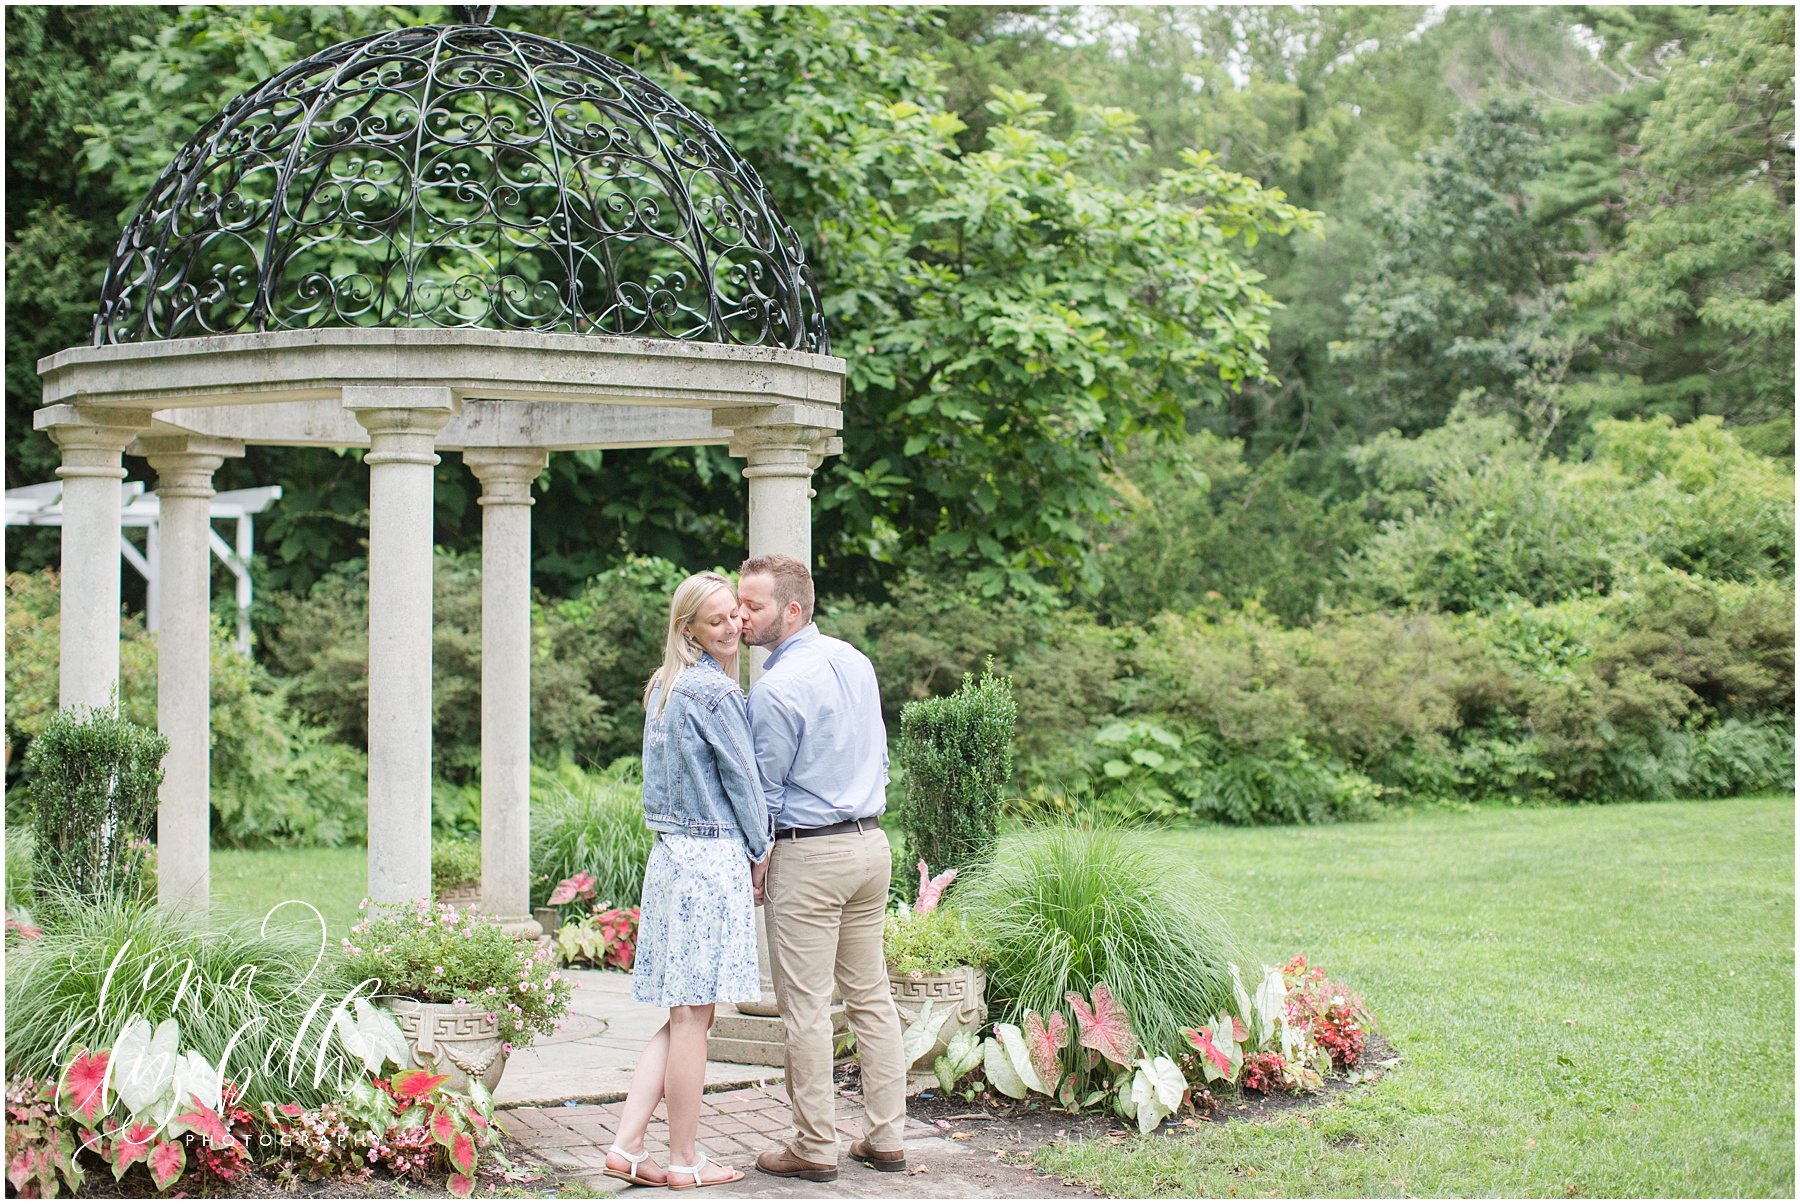 Sayen House & Gardens Engagement Photos - Tina Elizabeth Photography